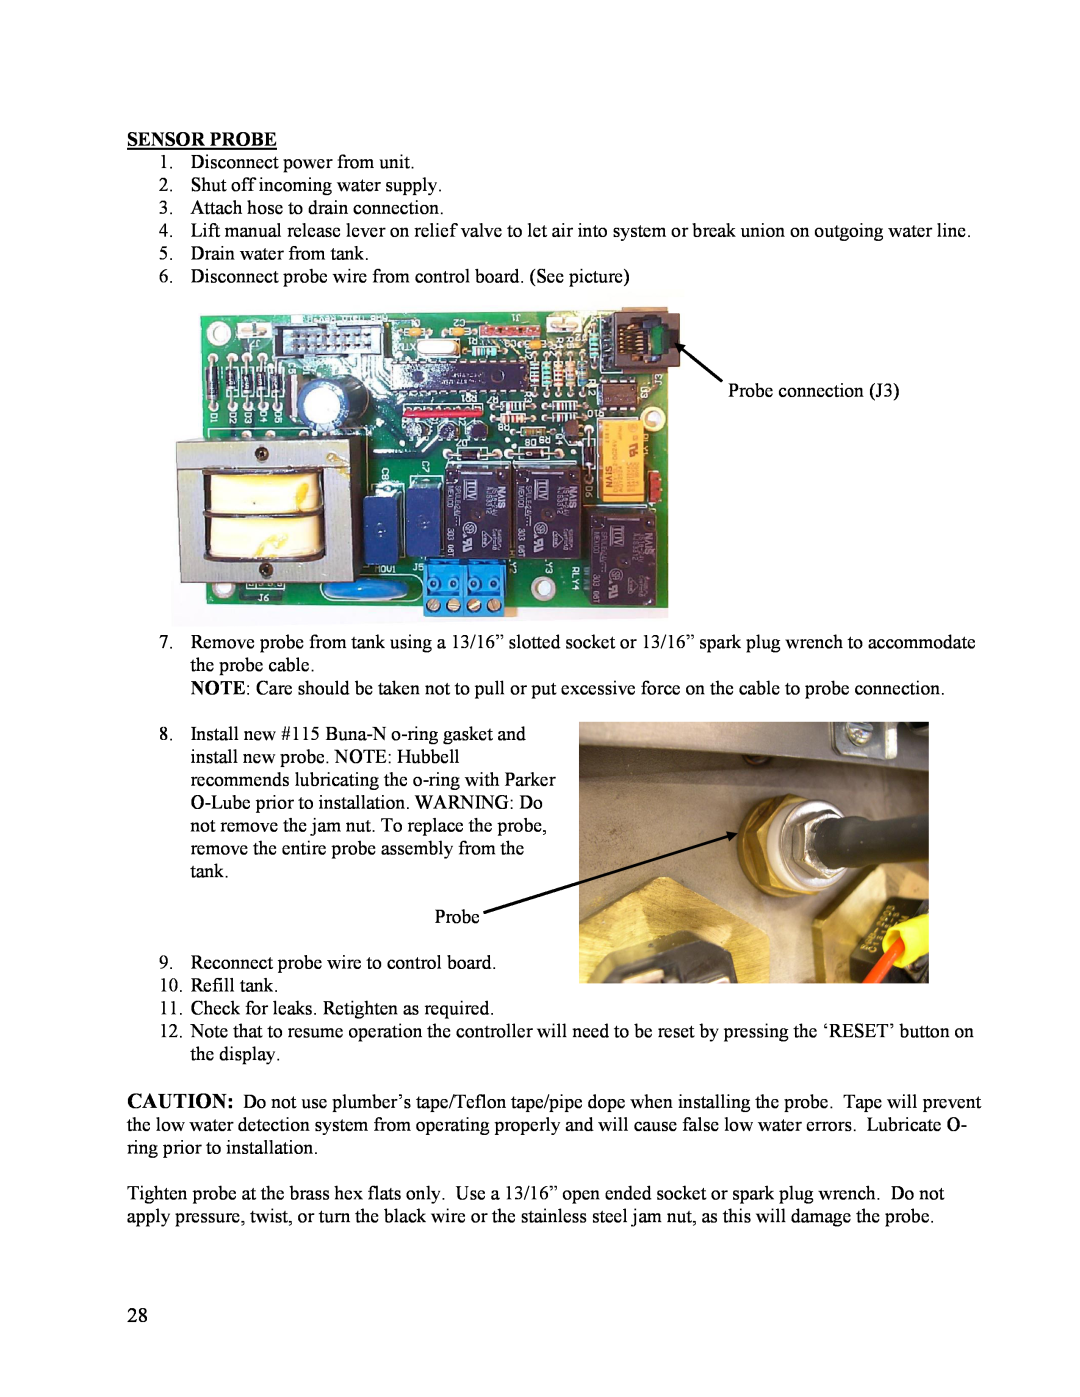 Hubbell Electric Heater Company J manual Sensor Probe 